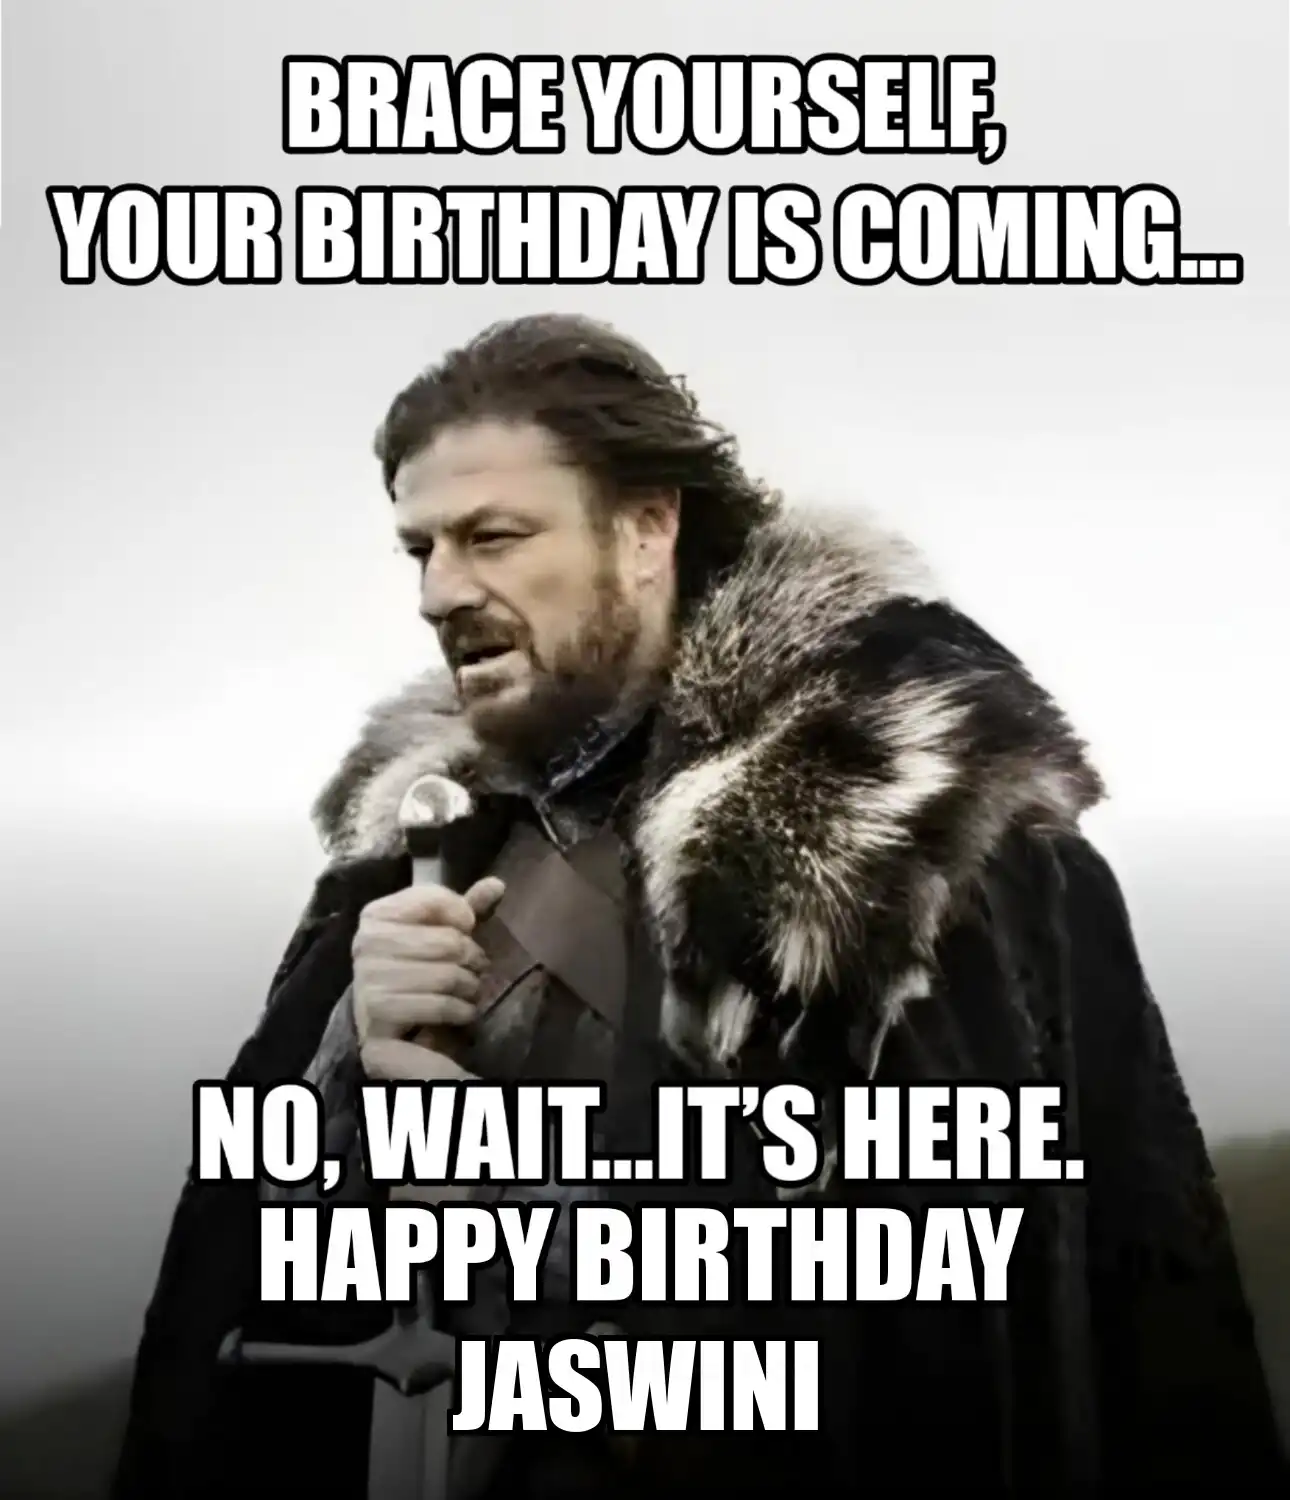 Happy Birthday Jaswini Brace Yourself Your Birthday Is Coming Meme